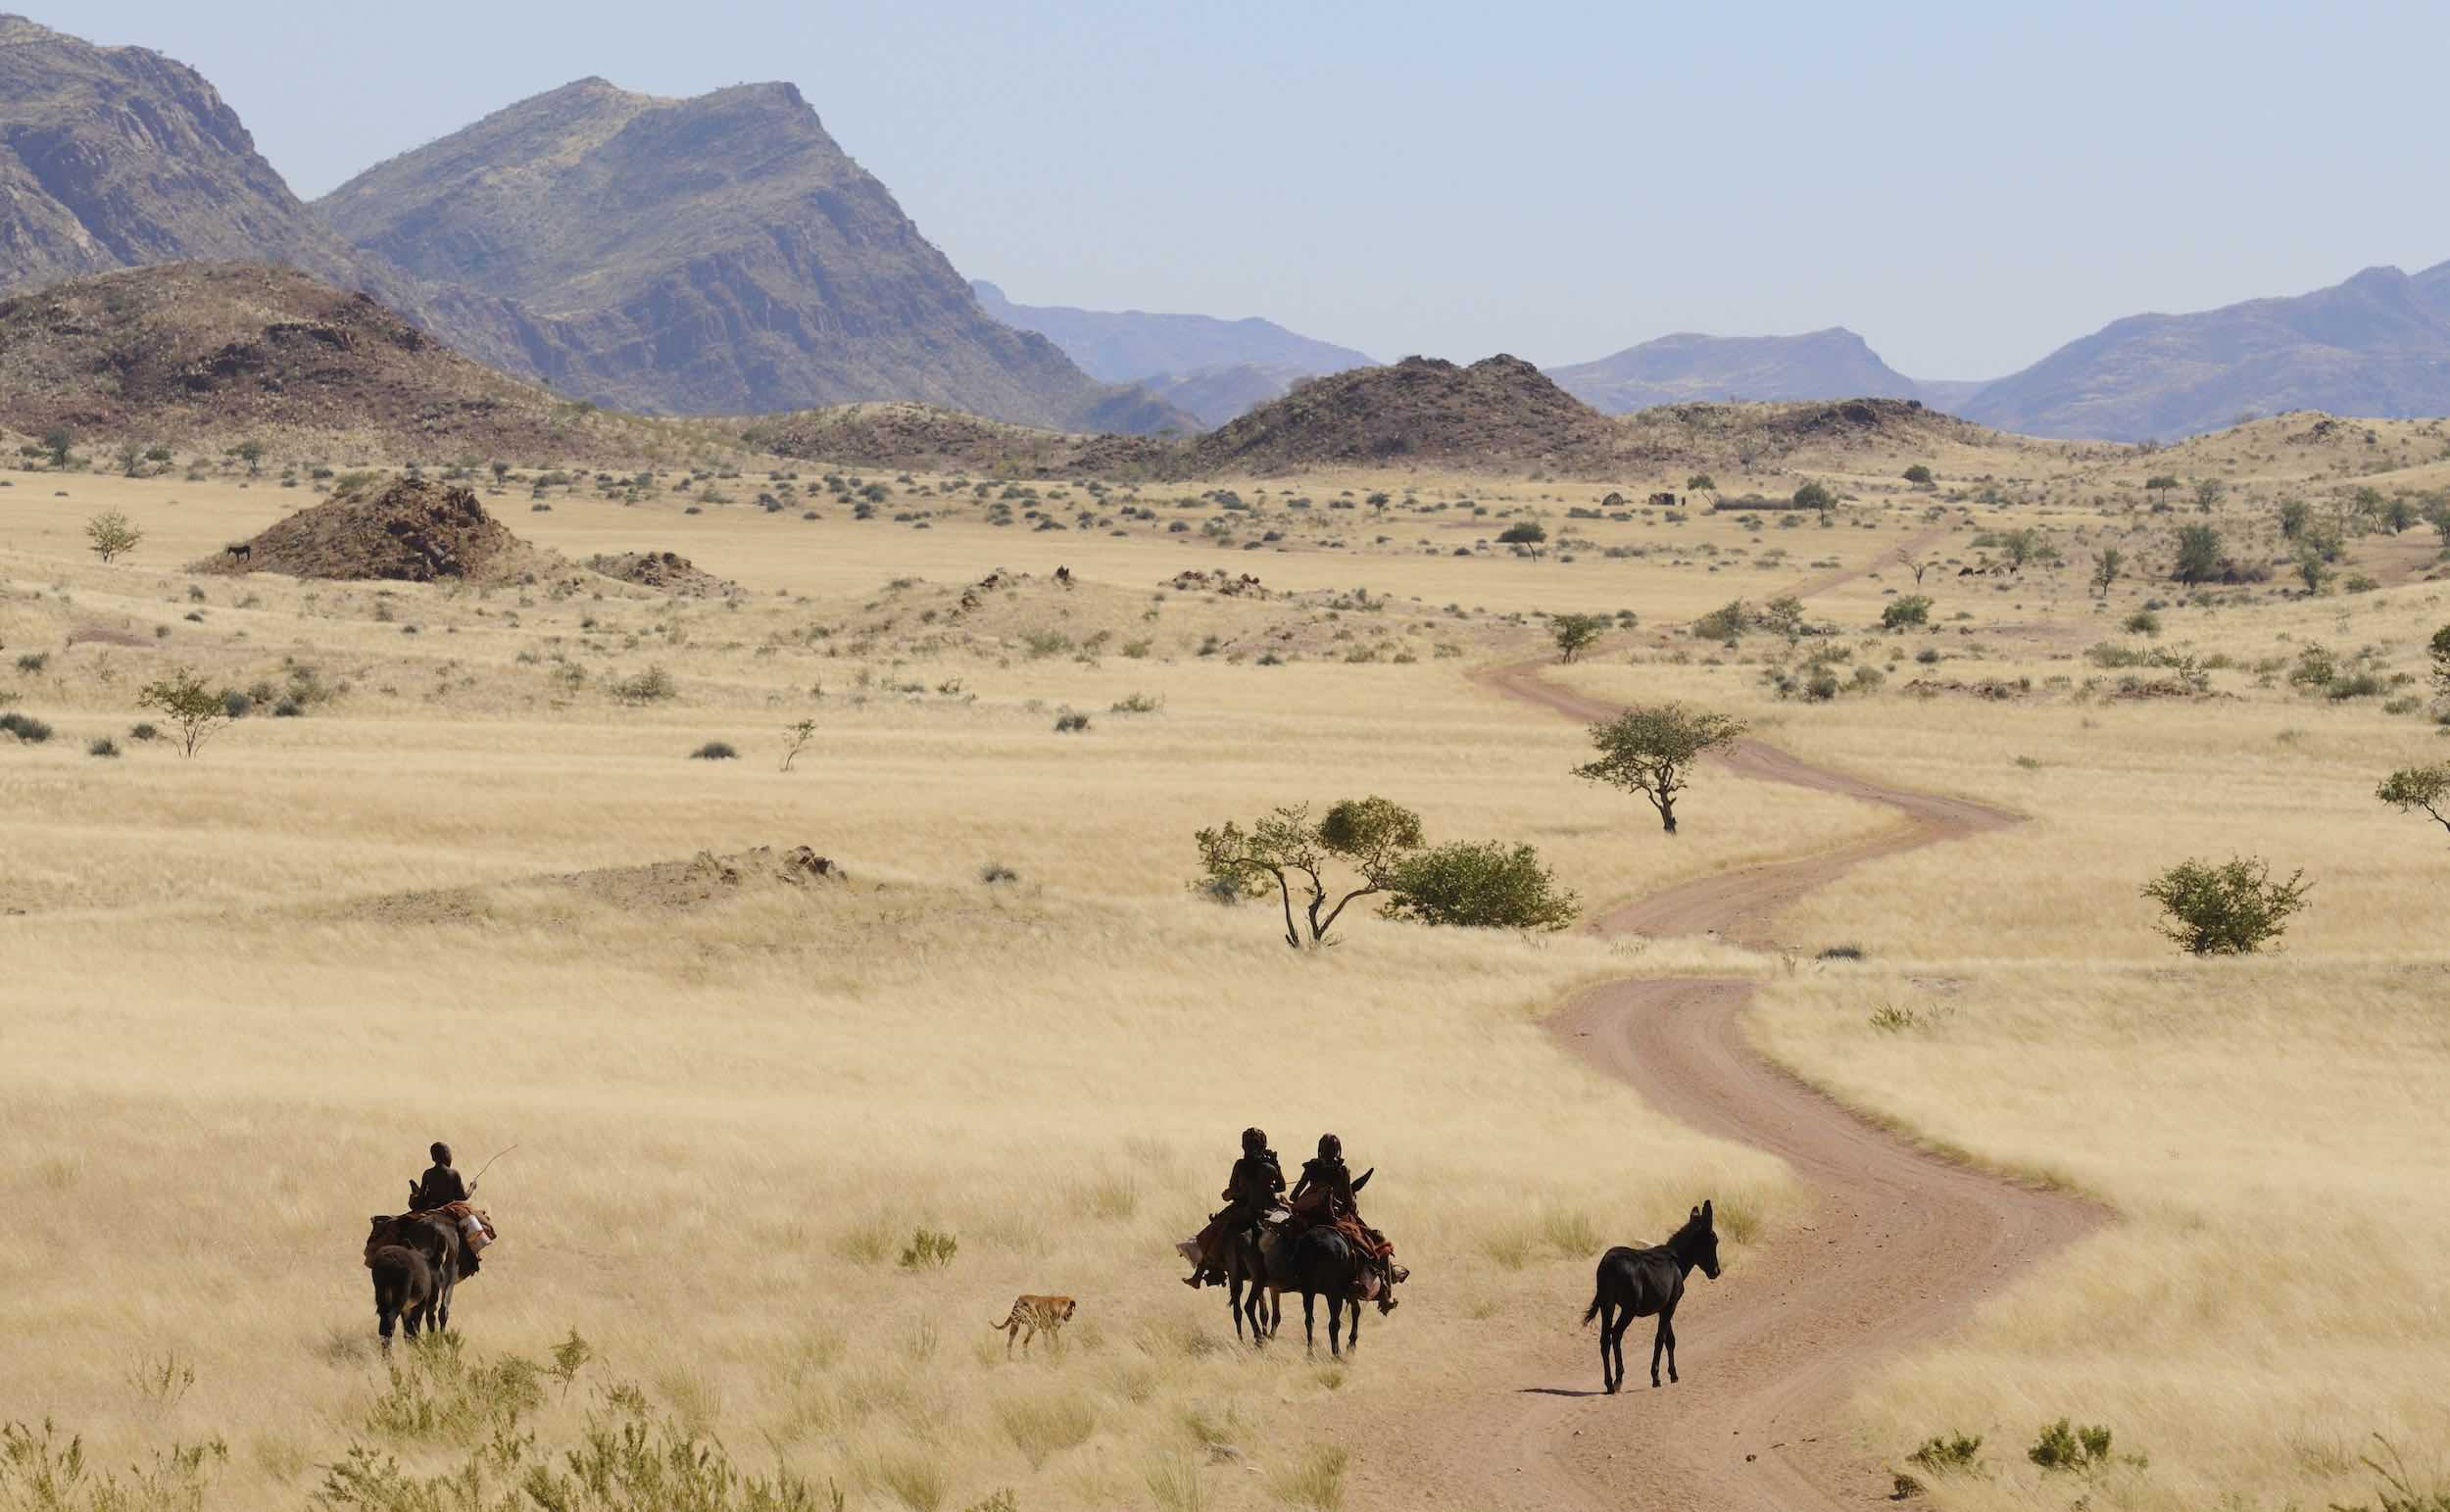 Local people riding through stunning Namibian scenery.